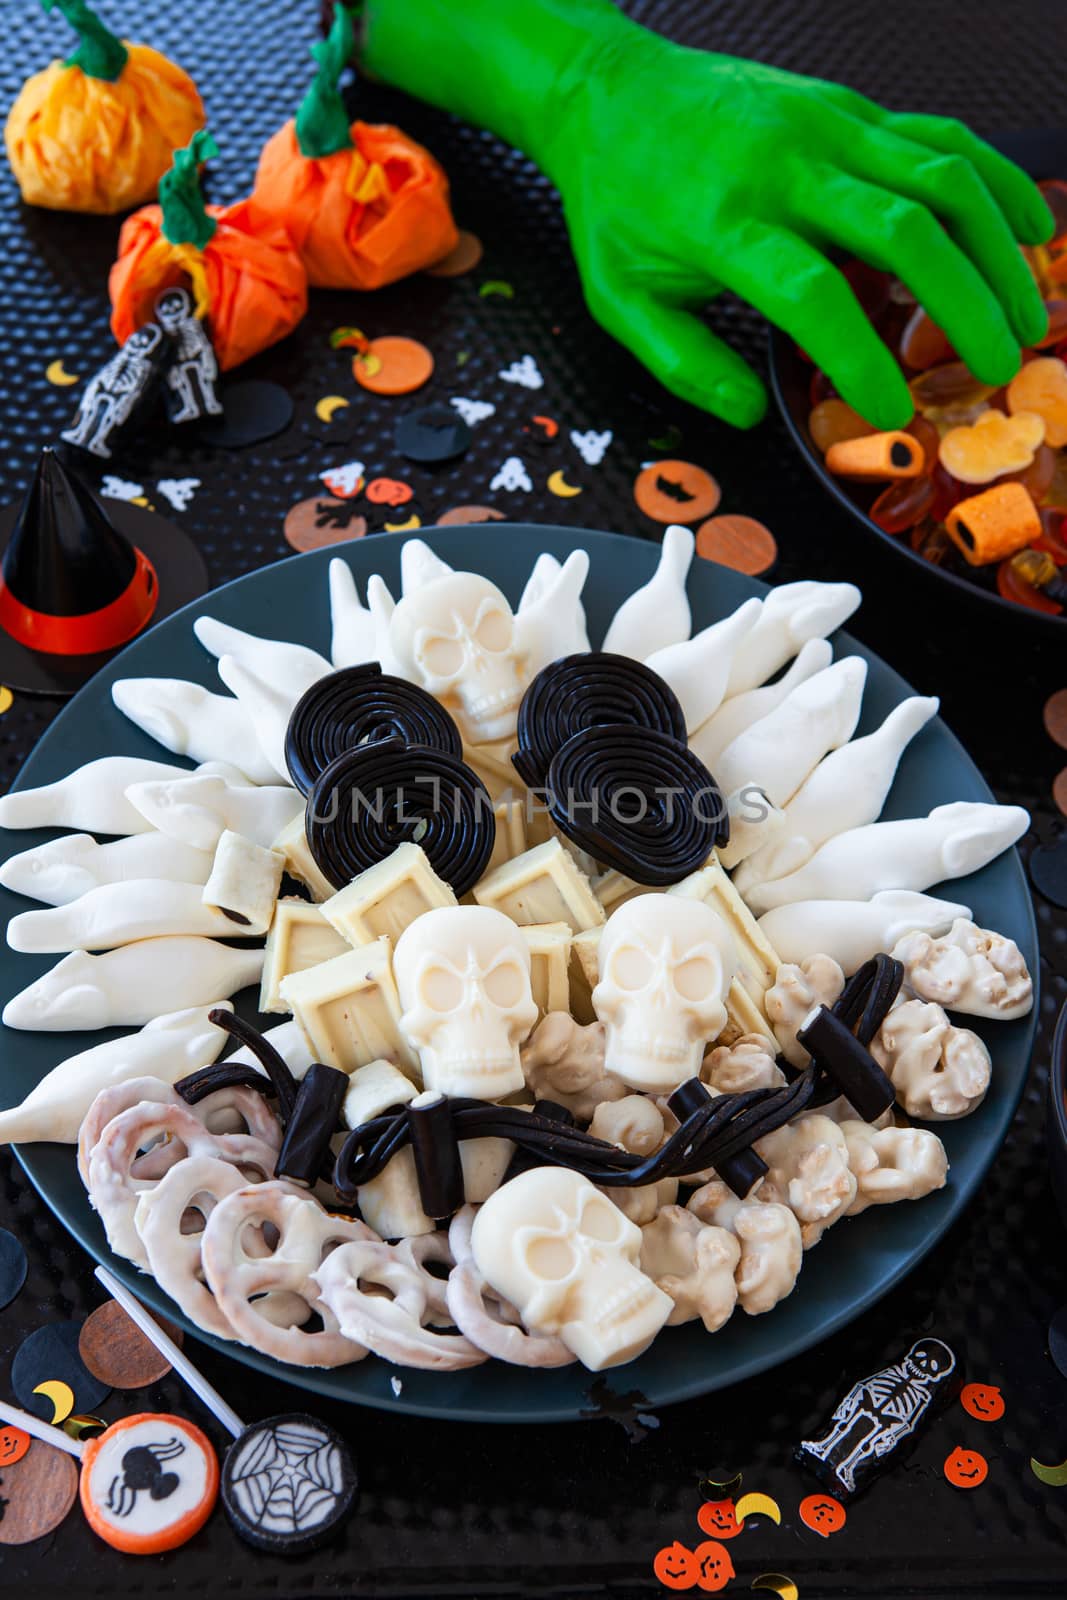 Halloween sweets in skull shape by BarbaraNeveu